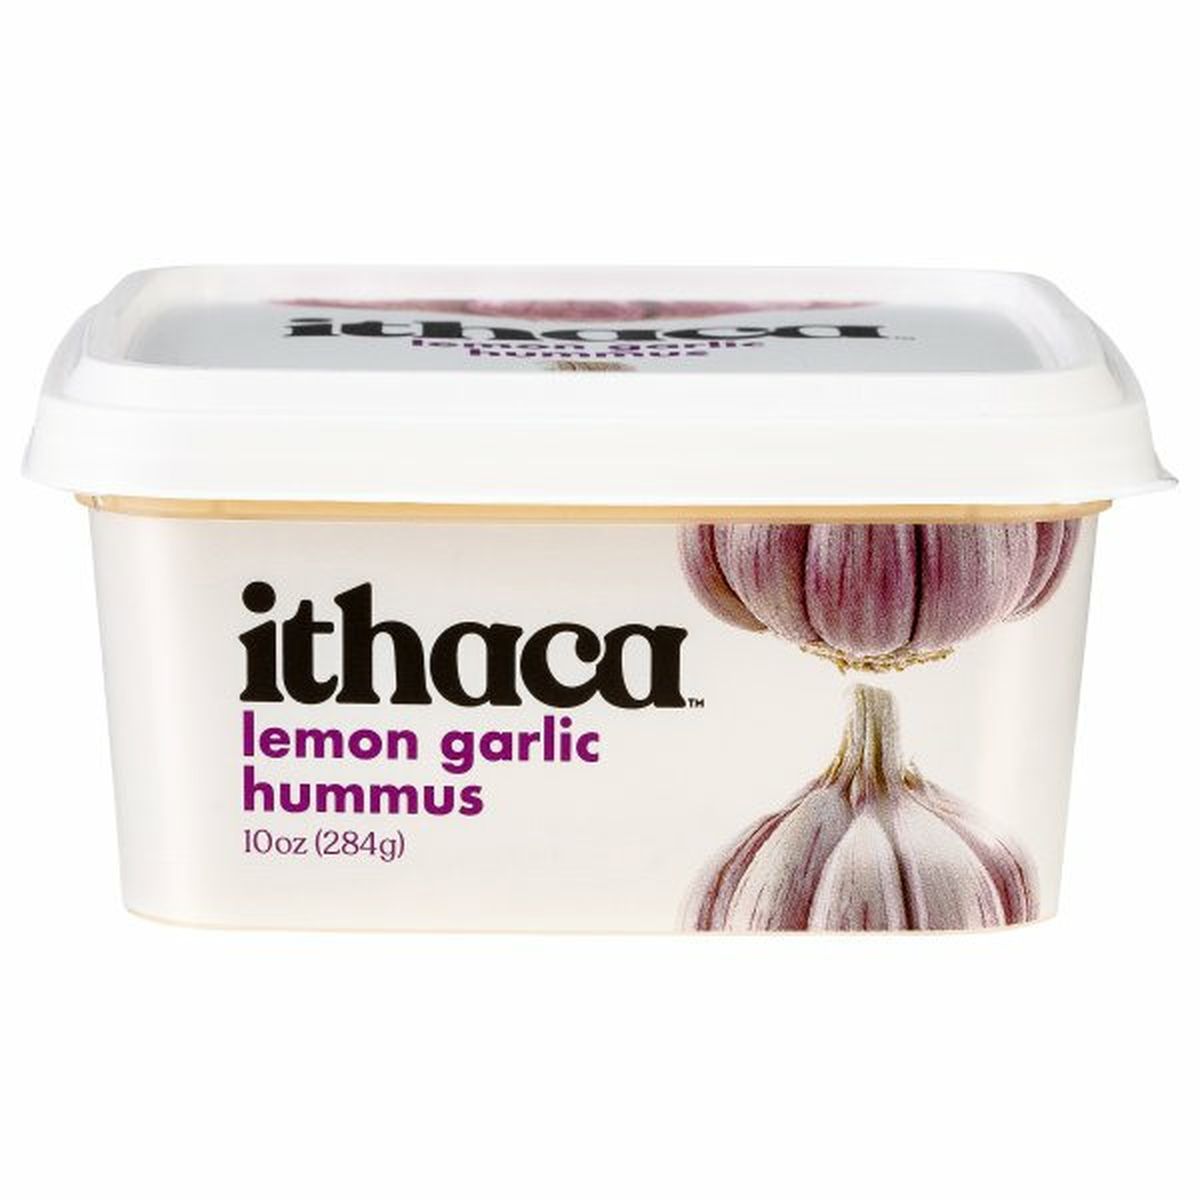 Calories in Ithaca Hummus, Lemon Garlic